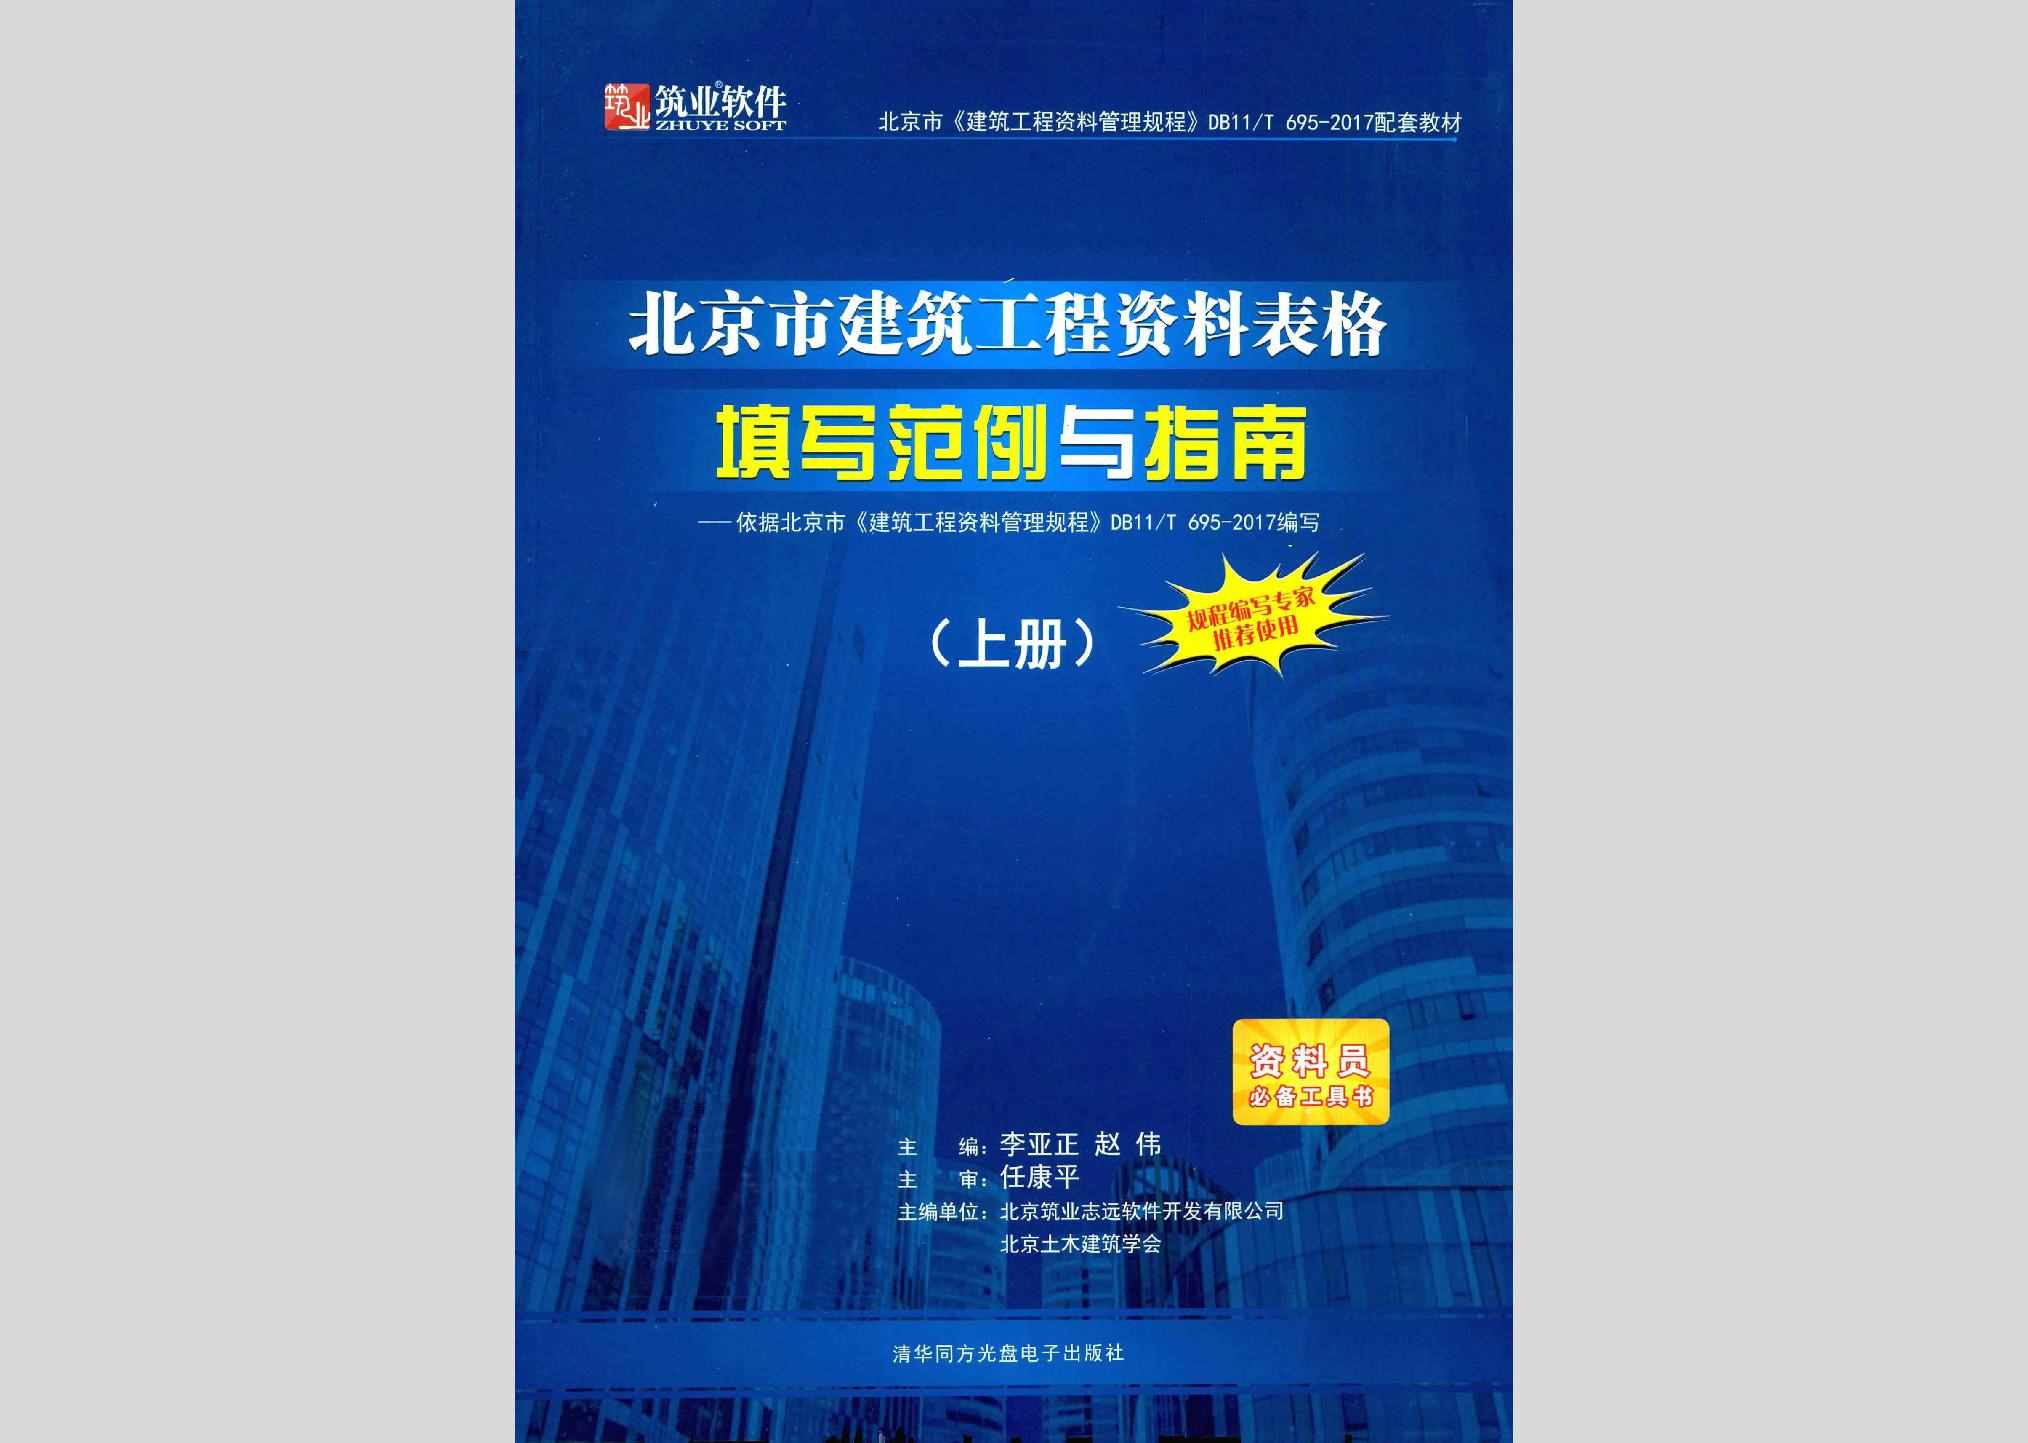 BJJZGCZL-S：北京市建筑工程资料表格填写范例与指南（上册）——依据北京市《建筑工程资料管理规程》DB11/T695-2017编写